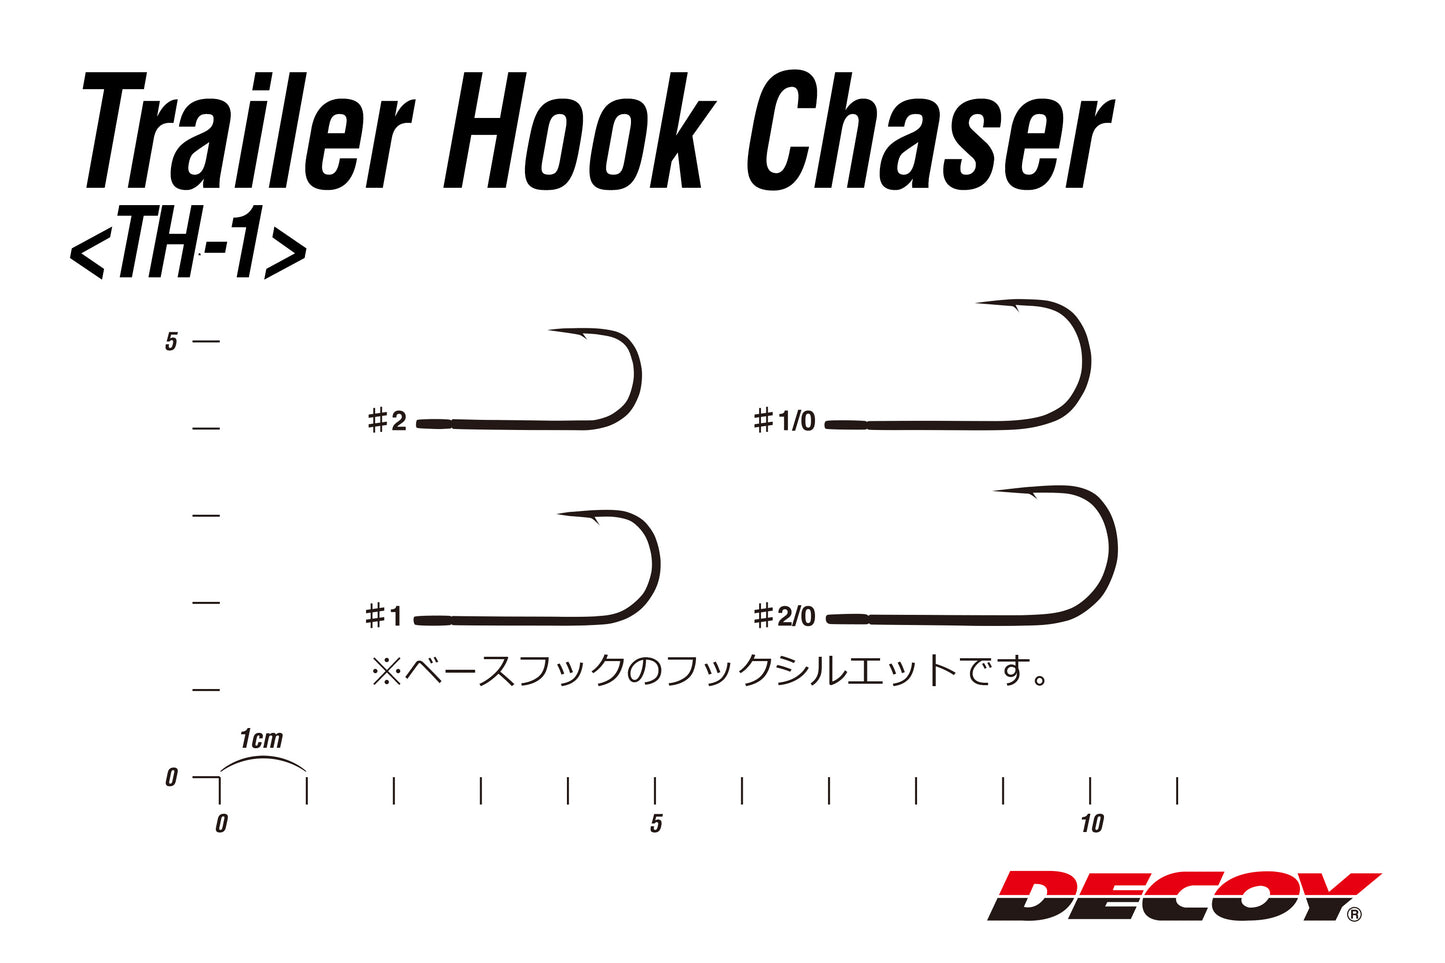 TH-1 Trailer Hook Chaser